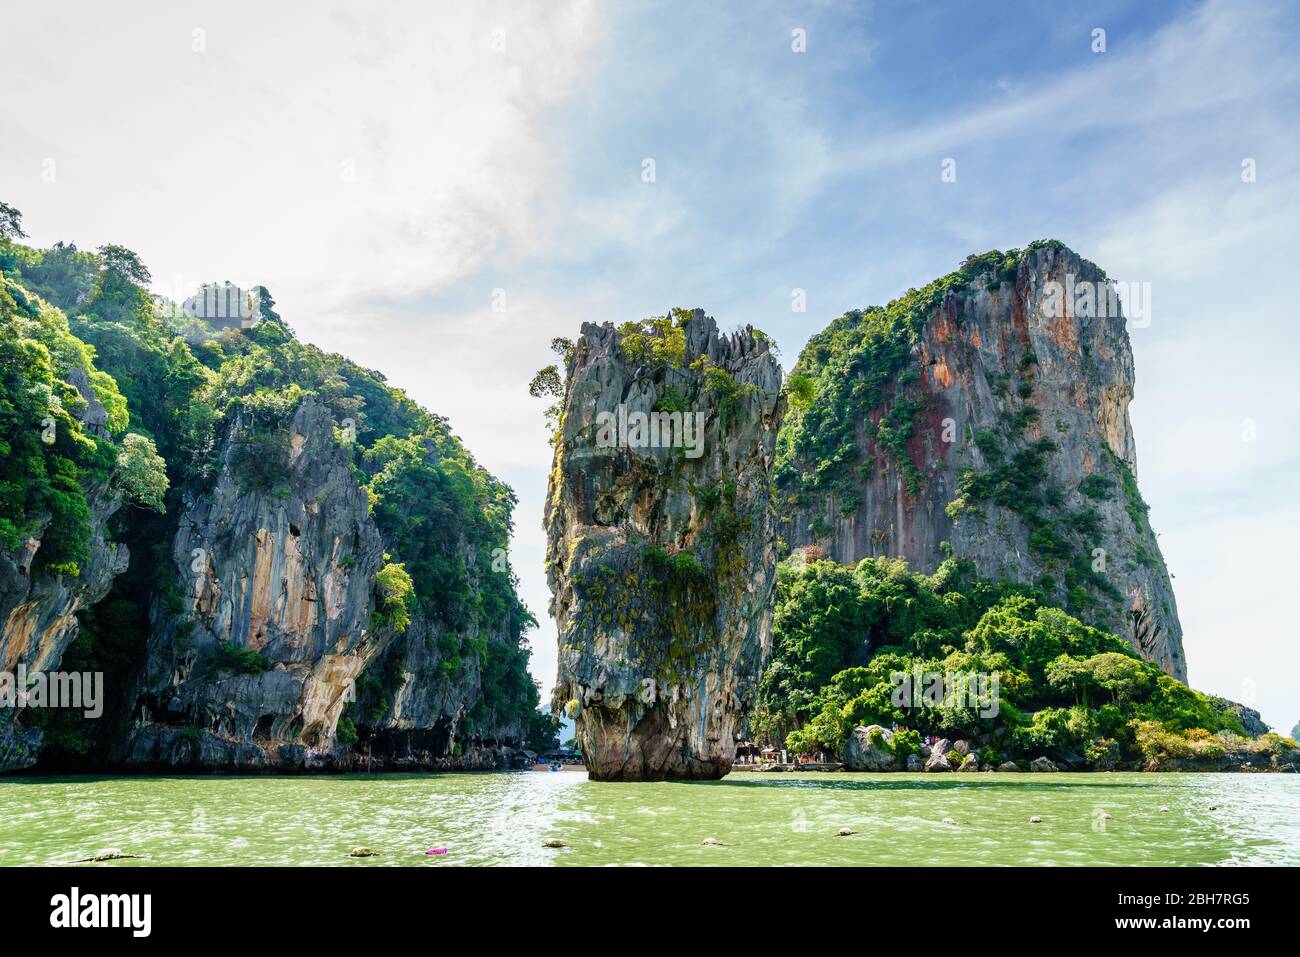 Khao Phing Kan aka James Bond Island in Andaman Sea in Thailand Stock Photo